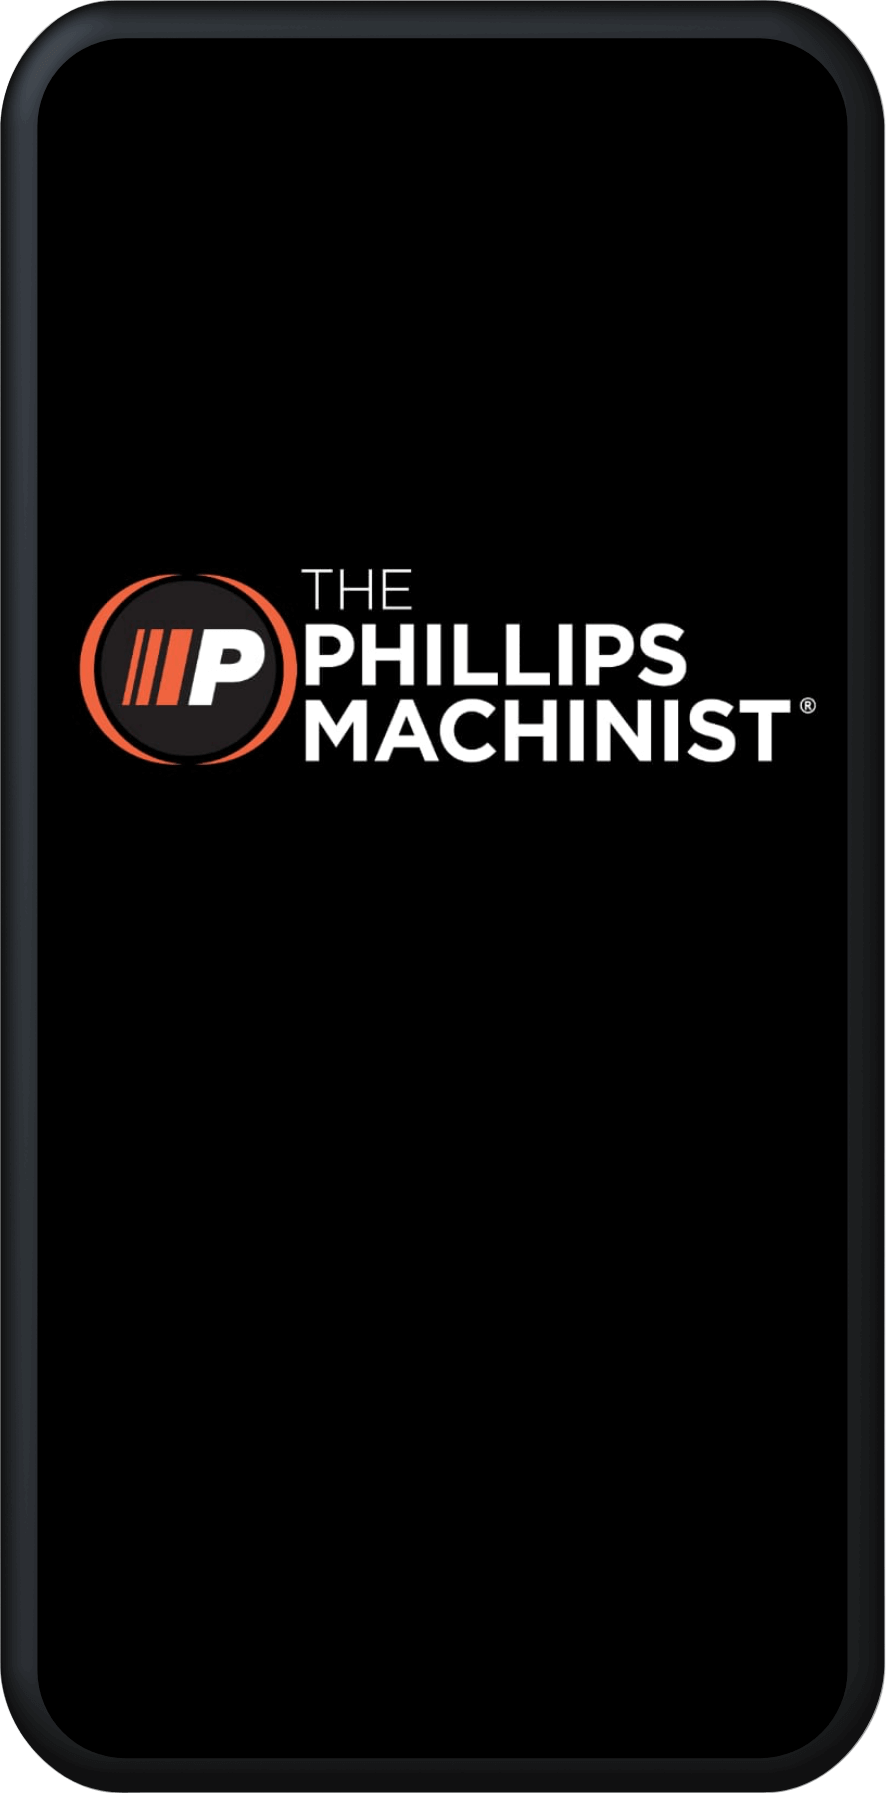 The Phillips Machinist